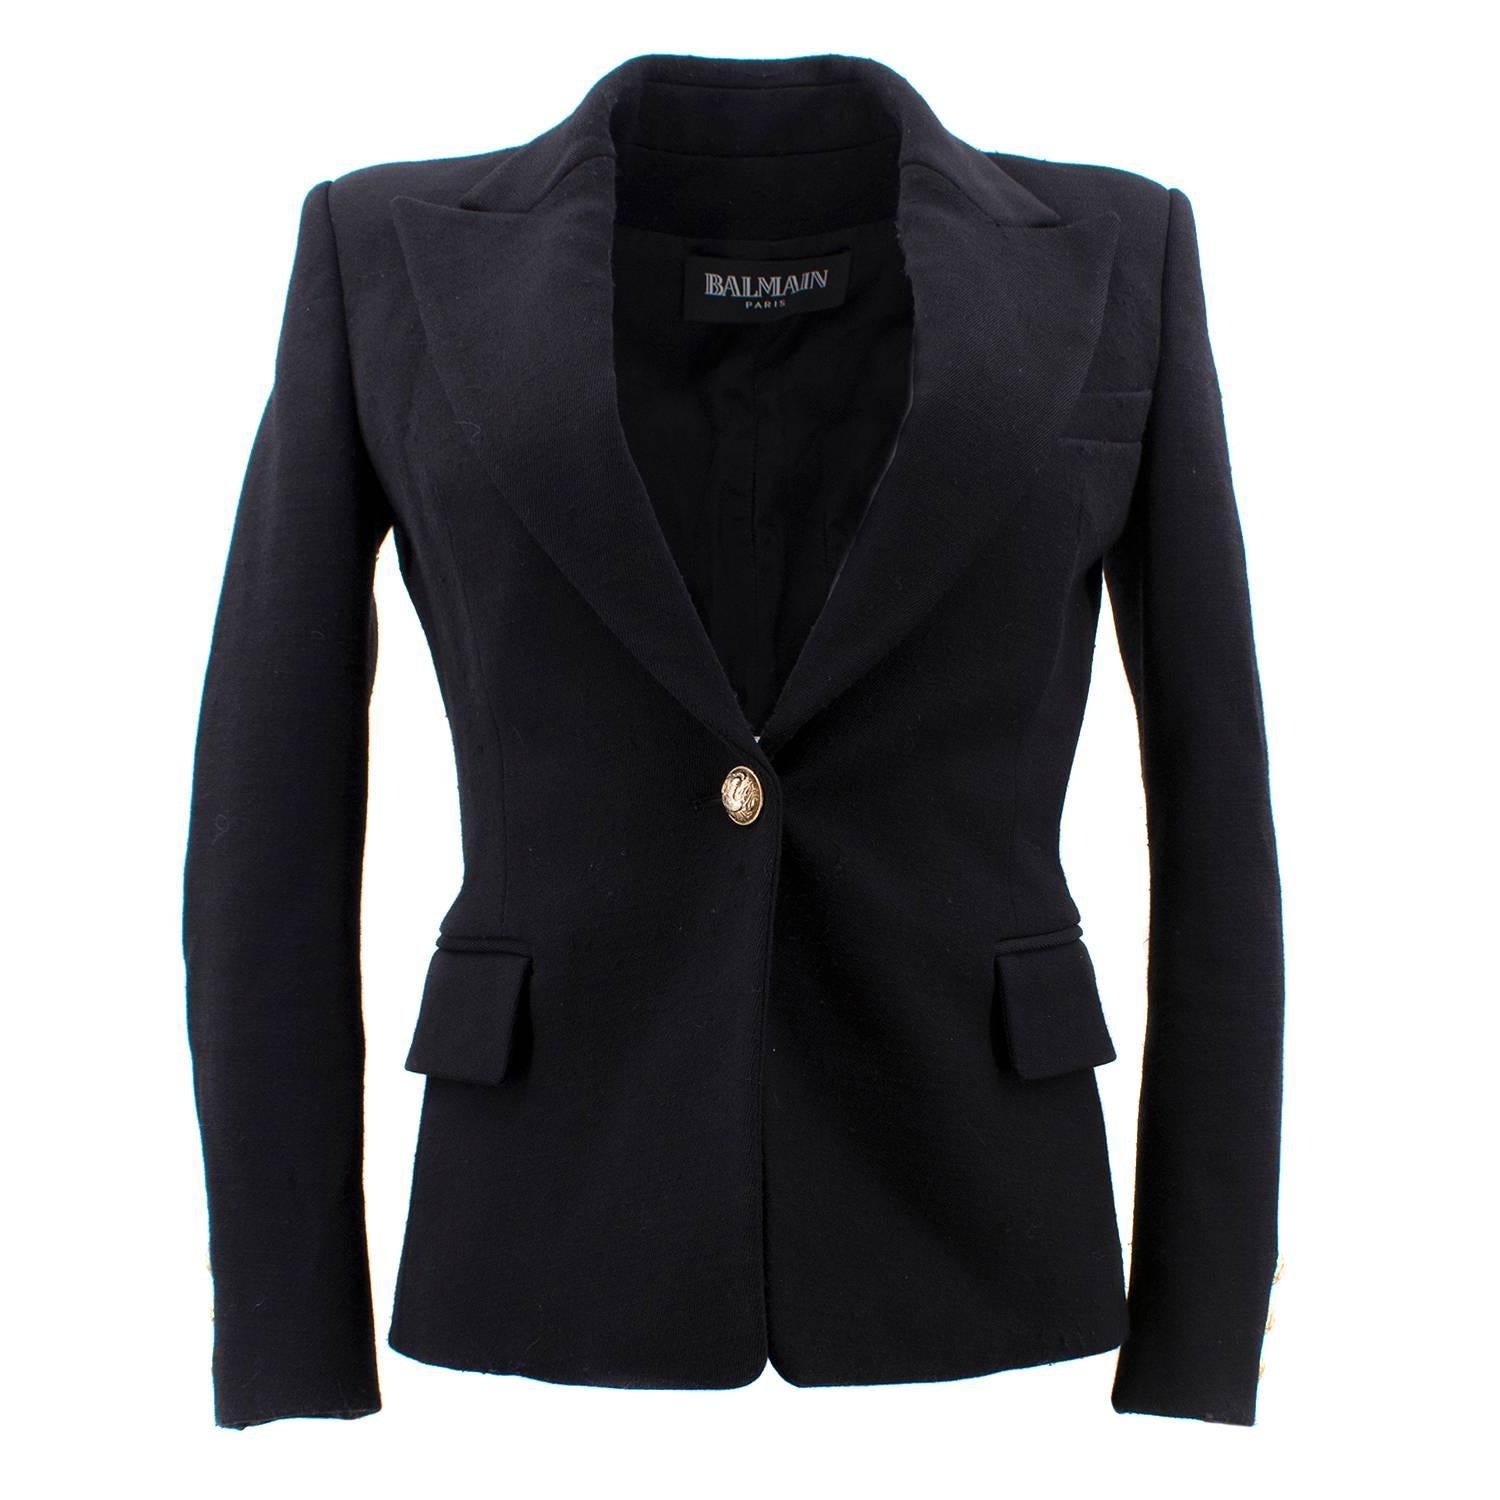 Balmain Black Single Breasted Blazer Jacket For Sale